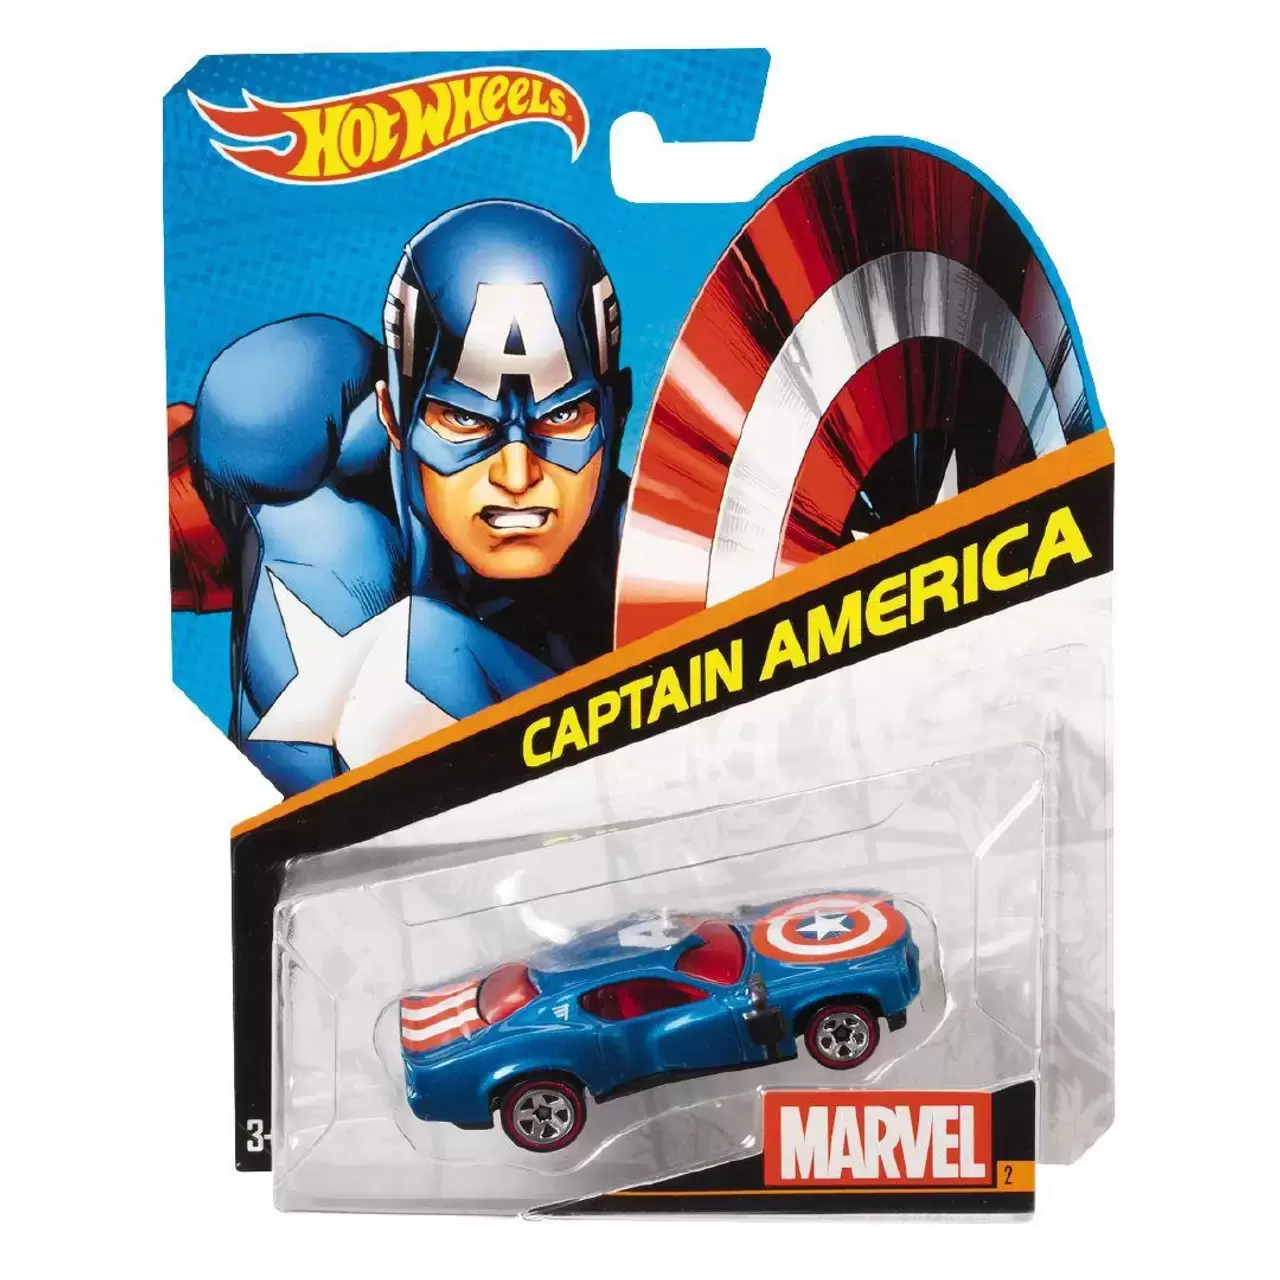 Marvel Character Cars - Marvel - Captain America